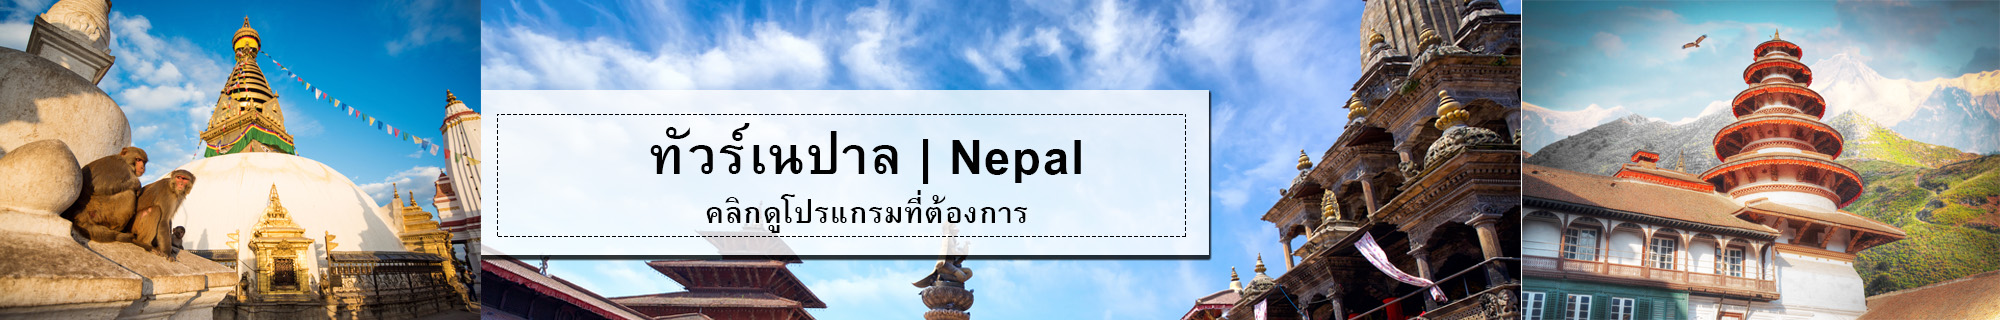 nepal india freebirdtour